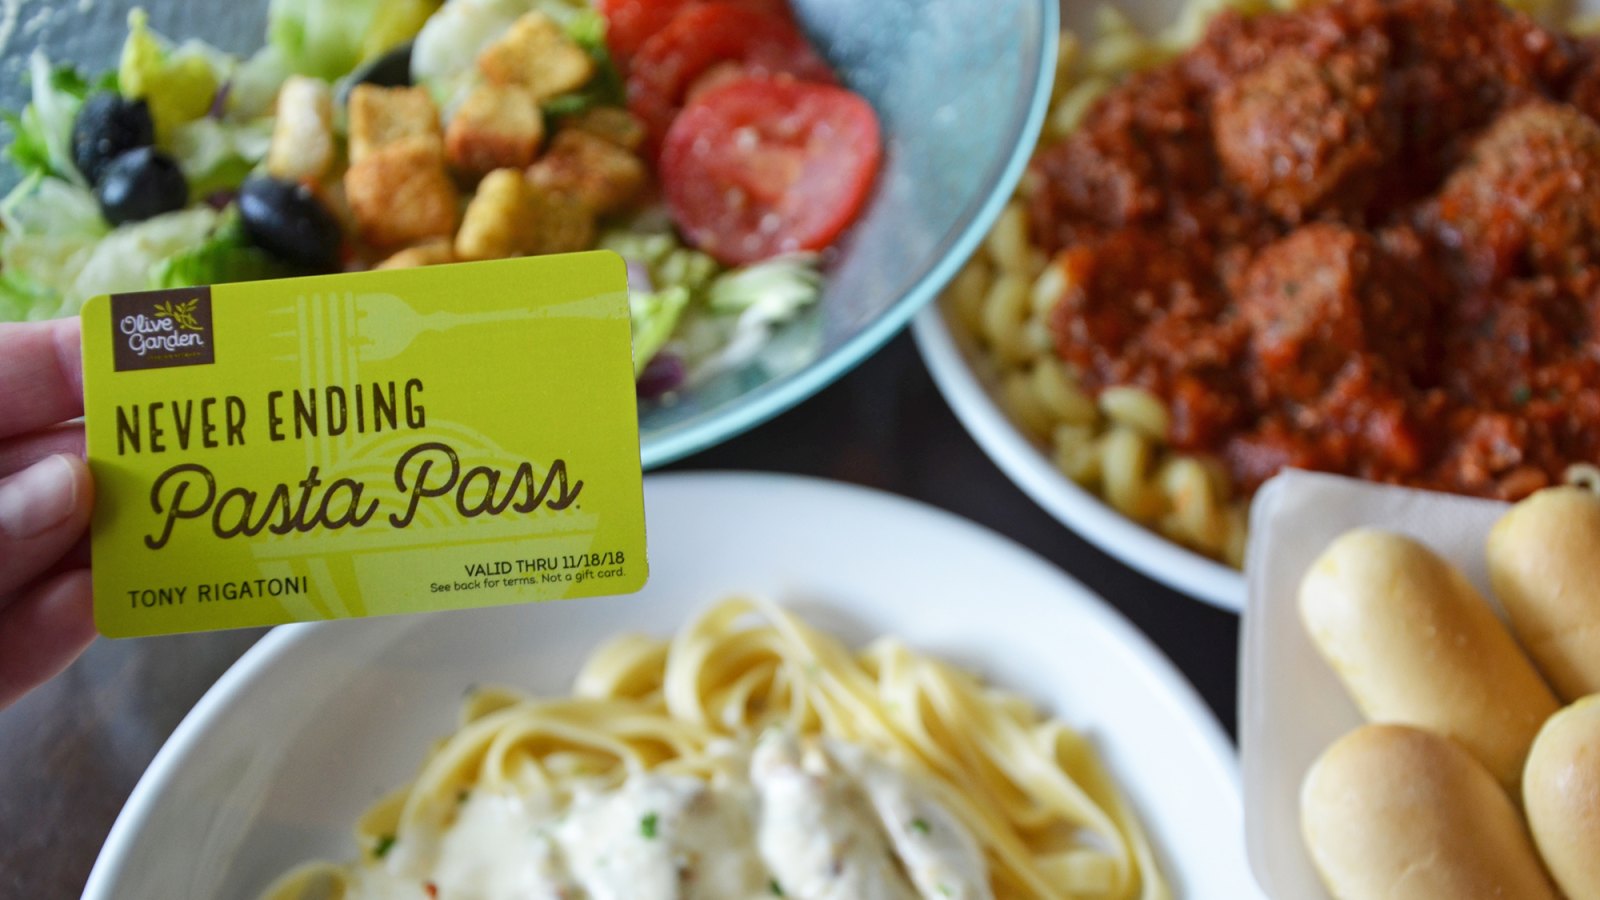 Olive Garden pasta pass